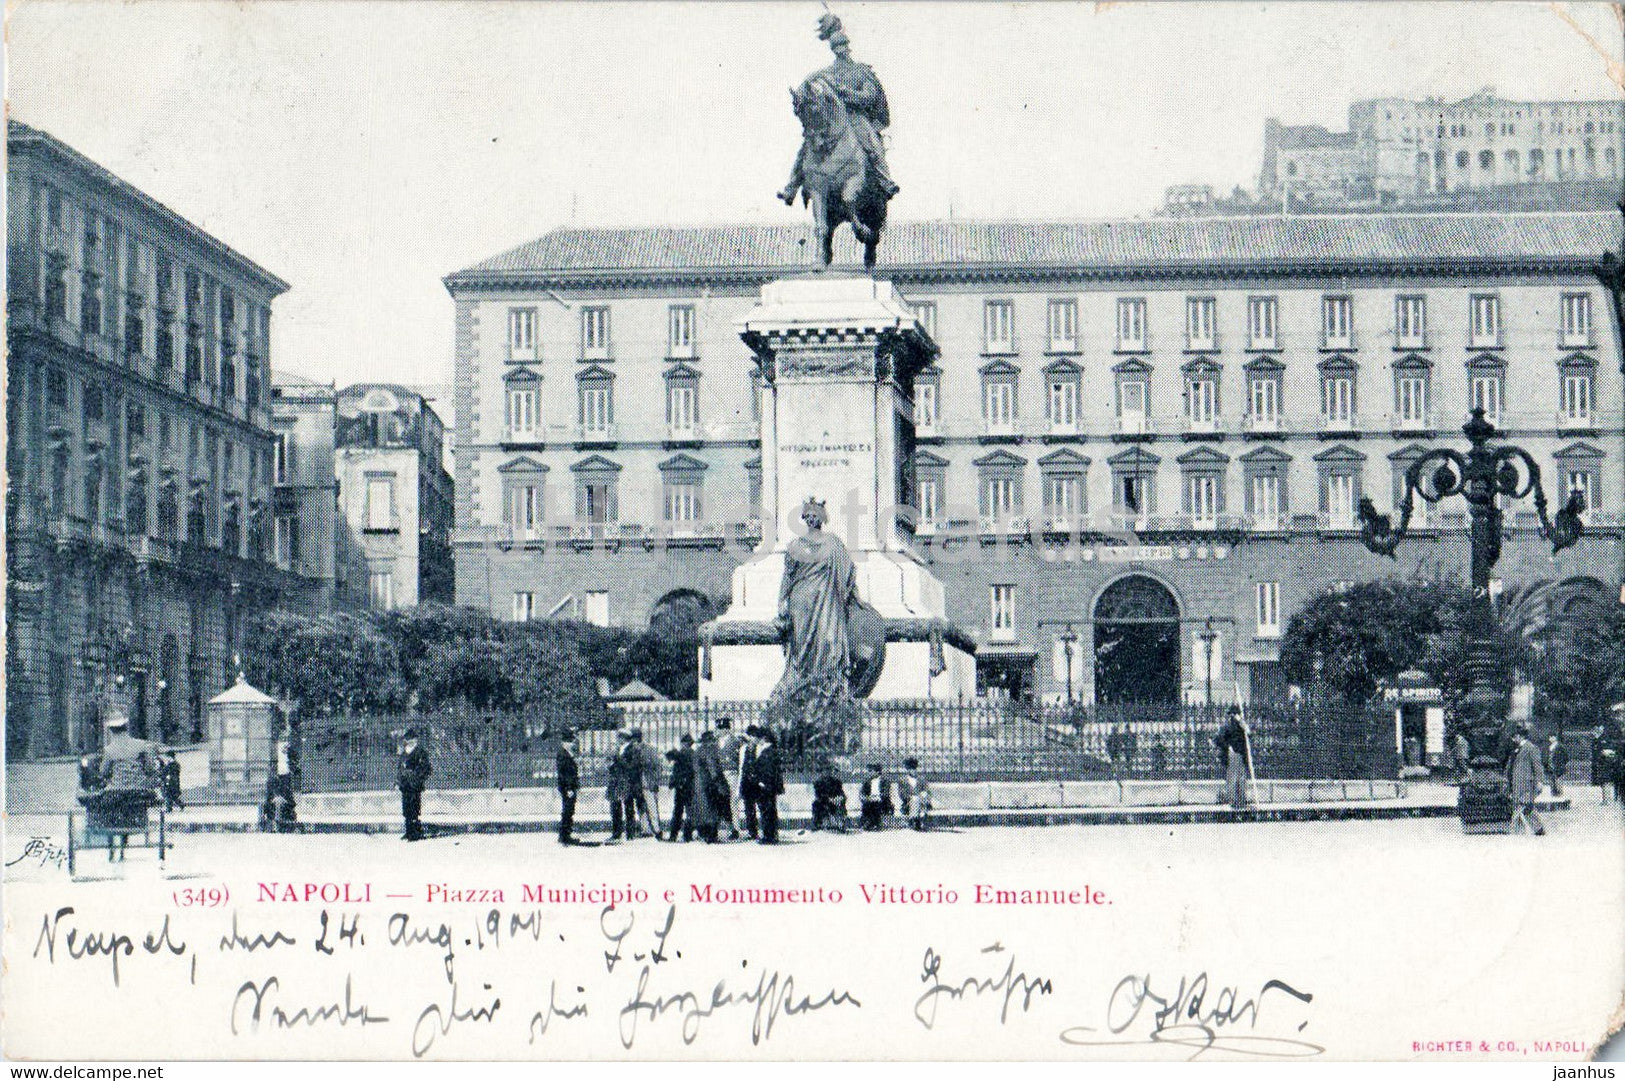 Napoli - Naples - Piazza Municipio e Monumento Vittorio Emanuele - monument - 349 - old postcard - 1900 - Italy - used - JH Postcards